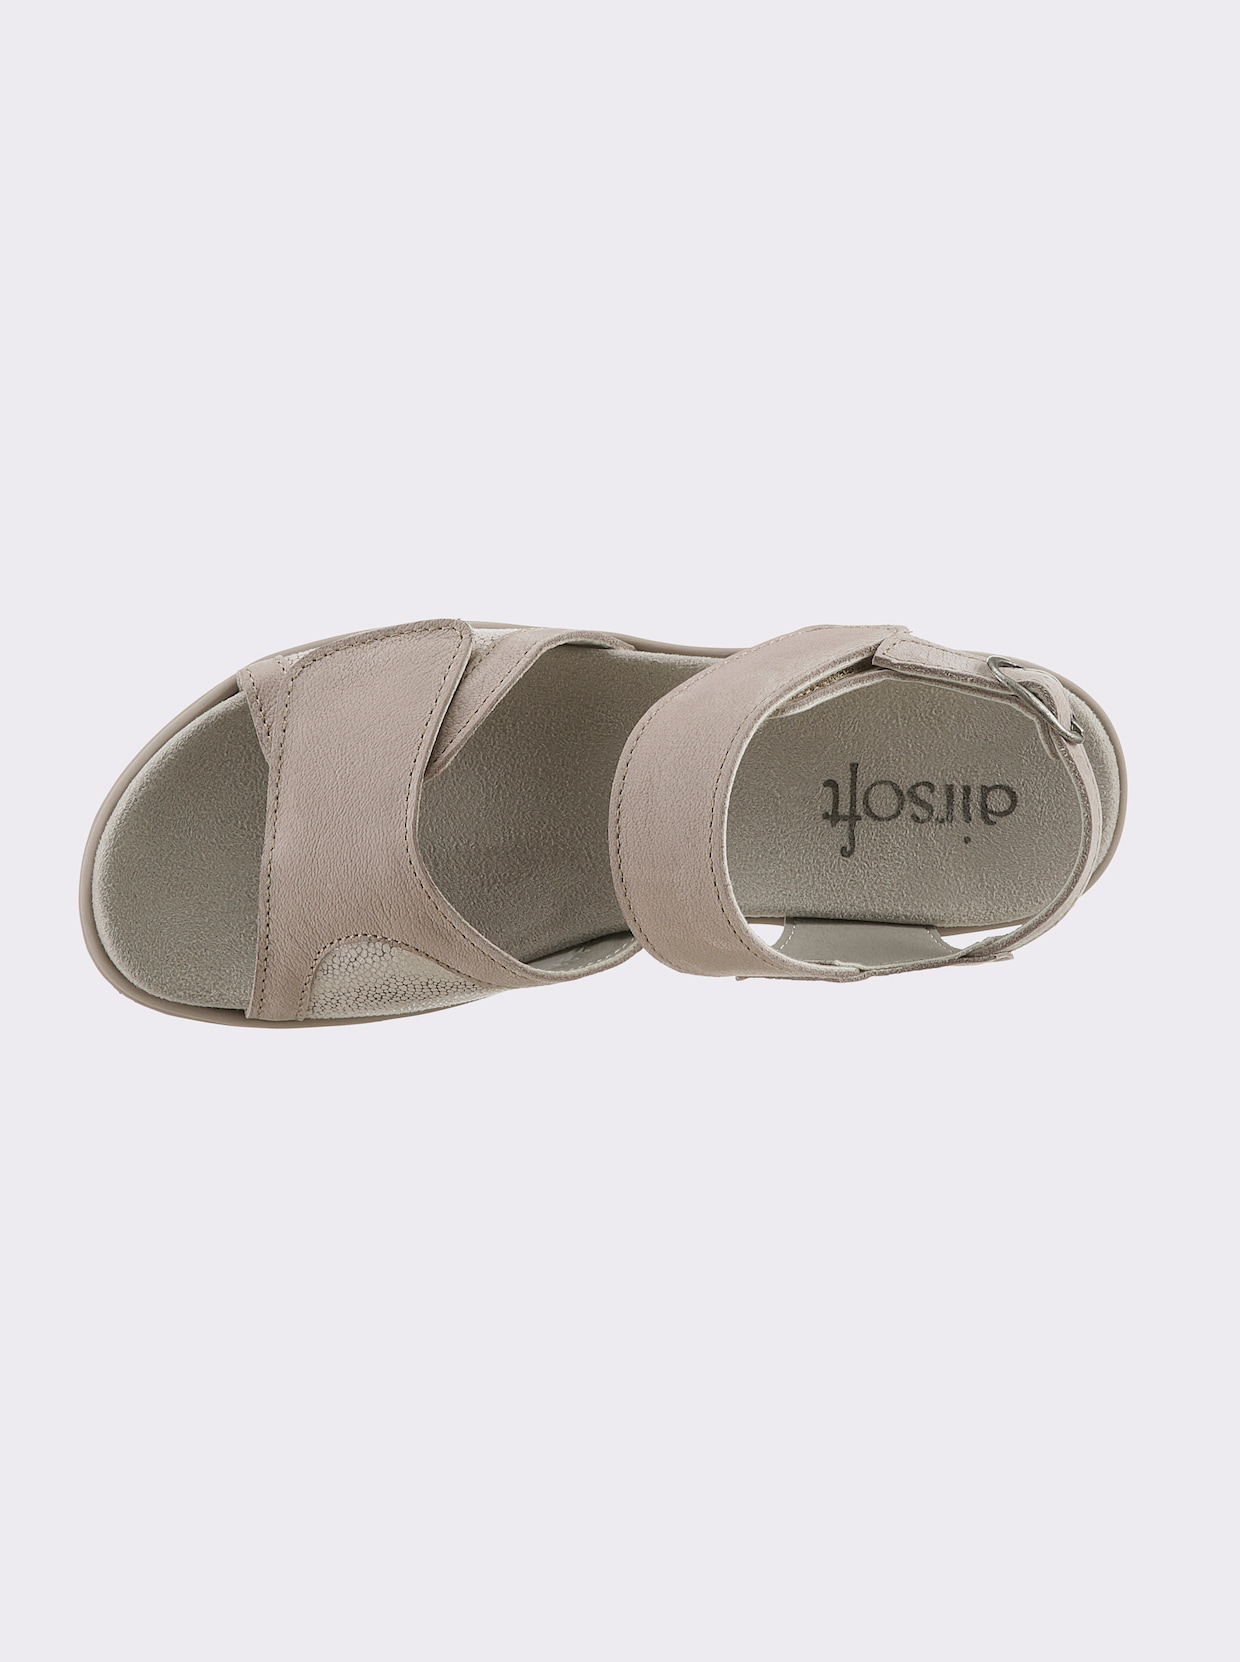 airsoft comfort+ Sandalen - beige